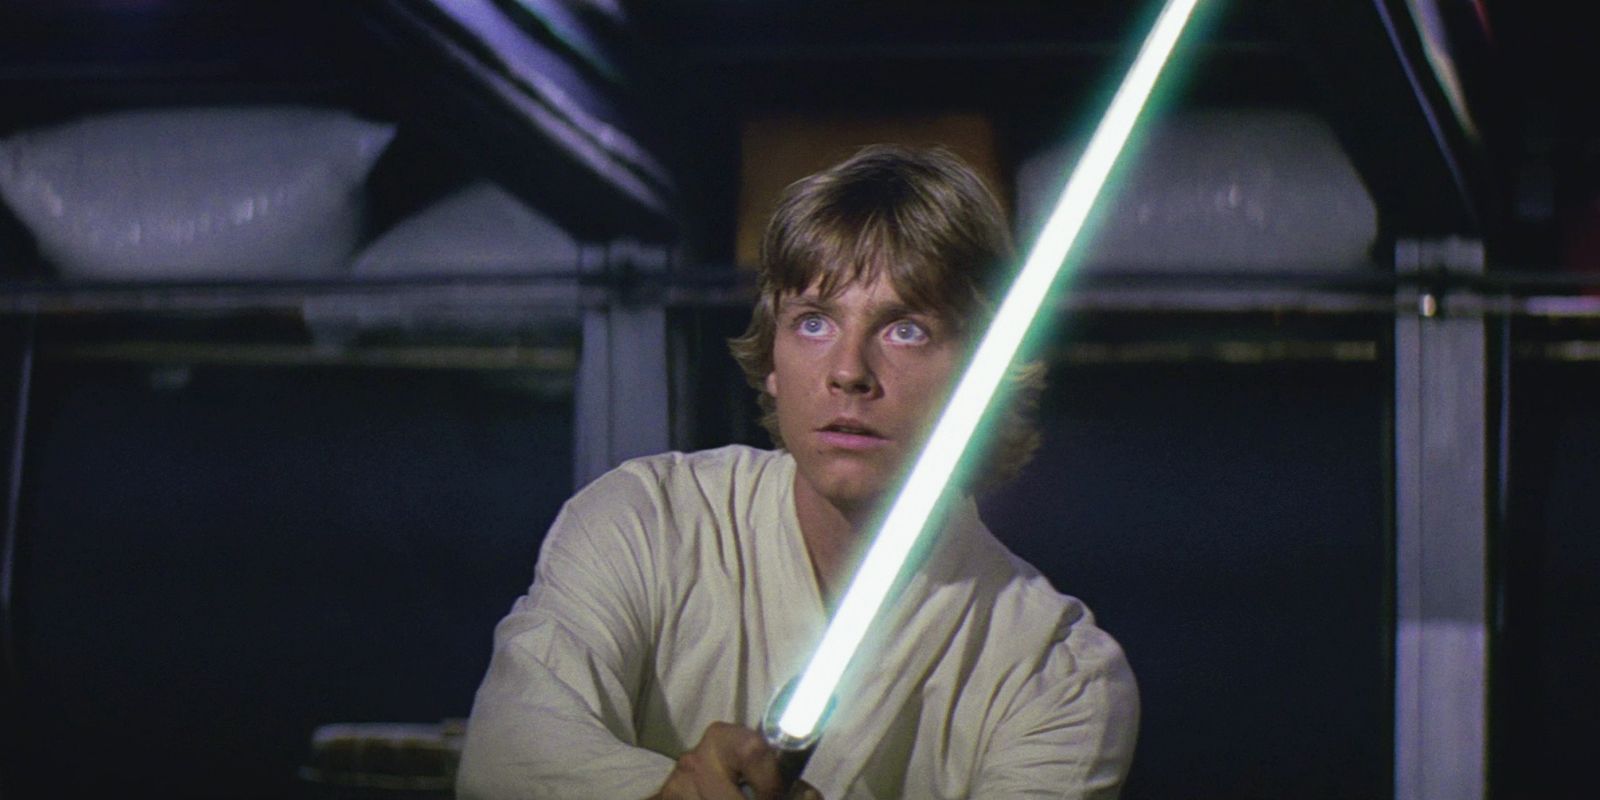 Star Wars: Episode IV: A New Hope (Blu-ray + Digital Code)